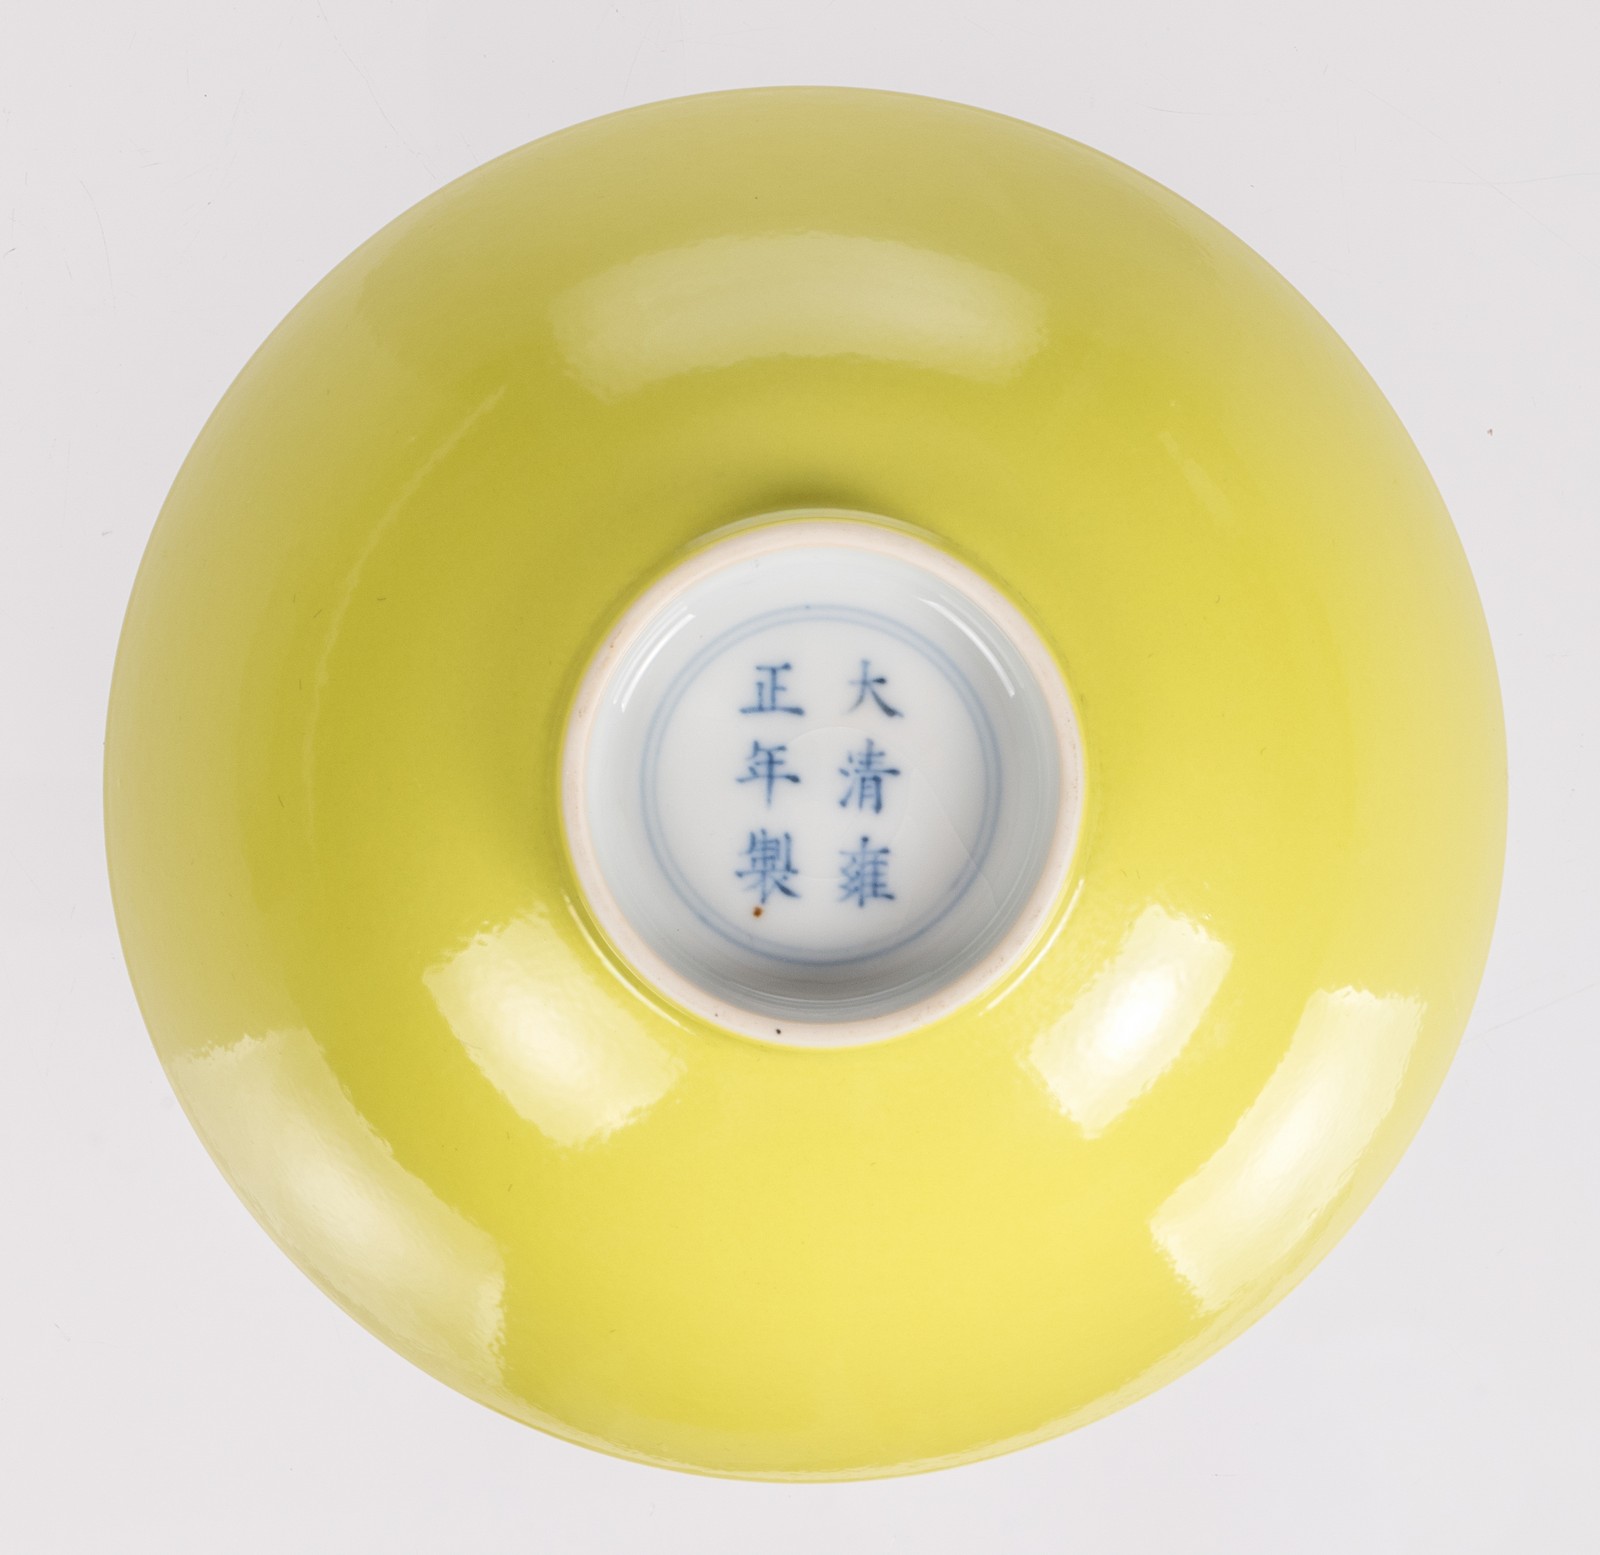 A Chinese green lemon monochrome bowl, marked Yongzheng, Qing dynasty, H 6,5 - Diameter 14,5 cm ( - Image 6 of 8